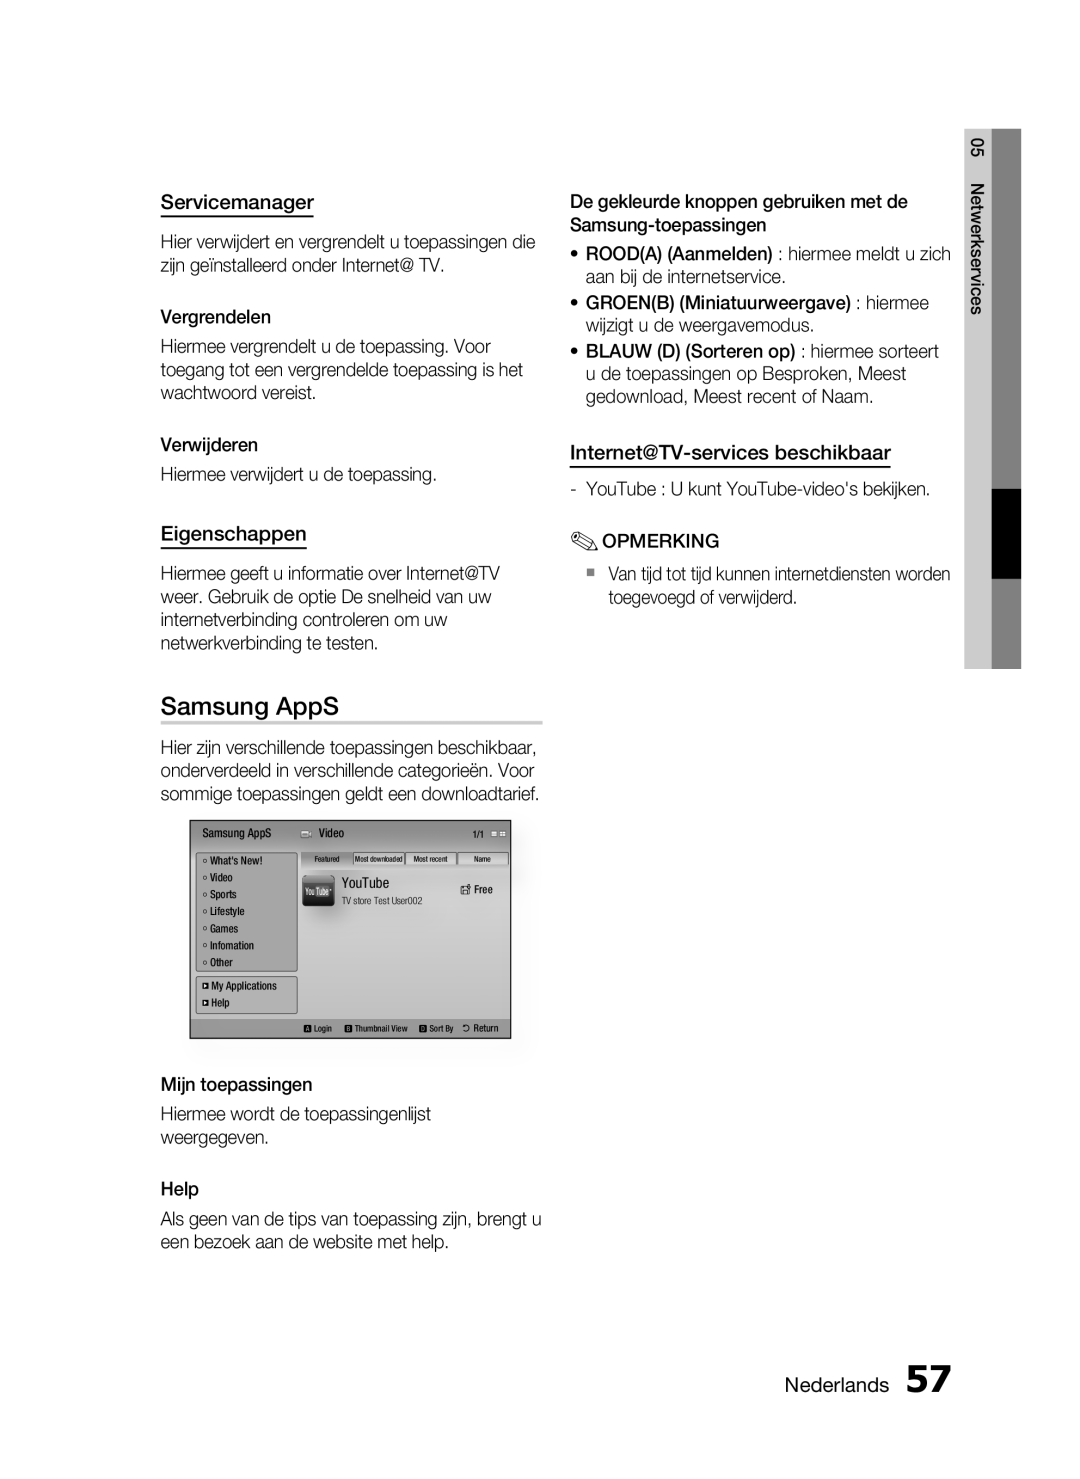 Samsung HT-C6200/XEF manual Servicemanager, Eigenschappen, Internet@TV-services beschikbaar, Samsung AppS, Nederlands 